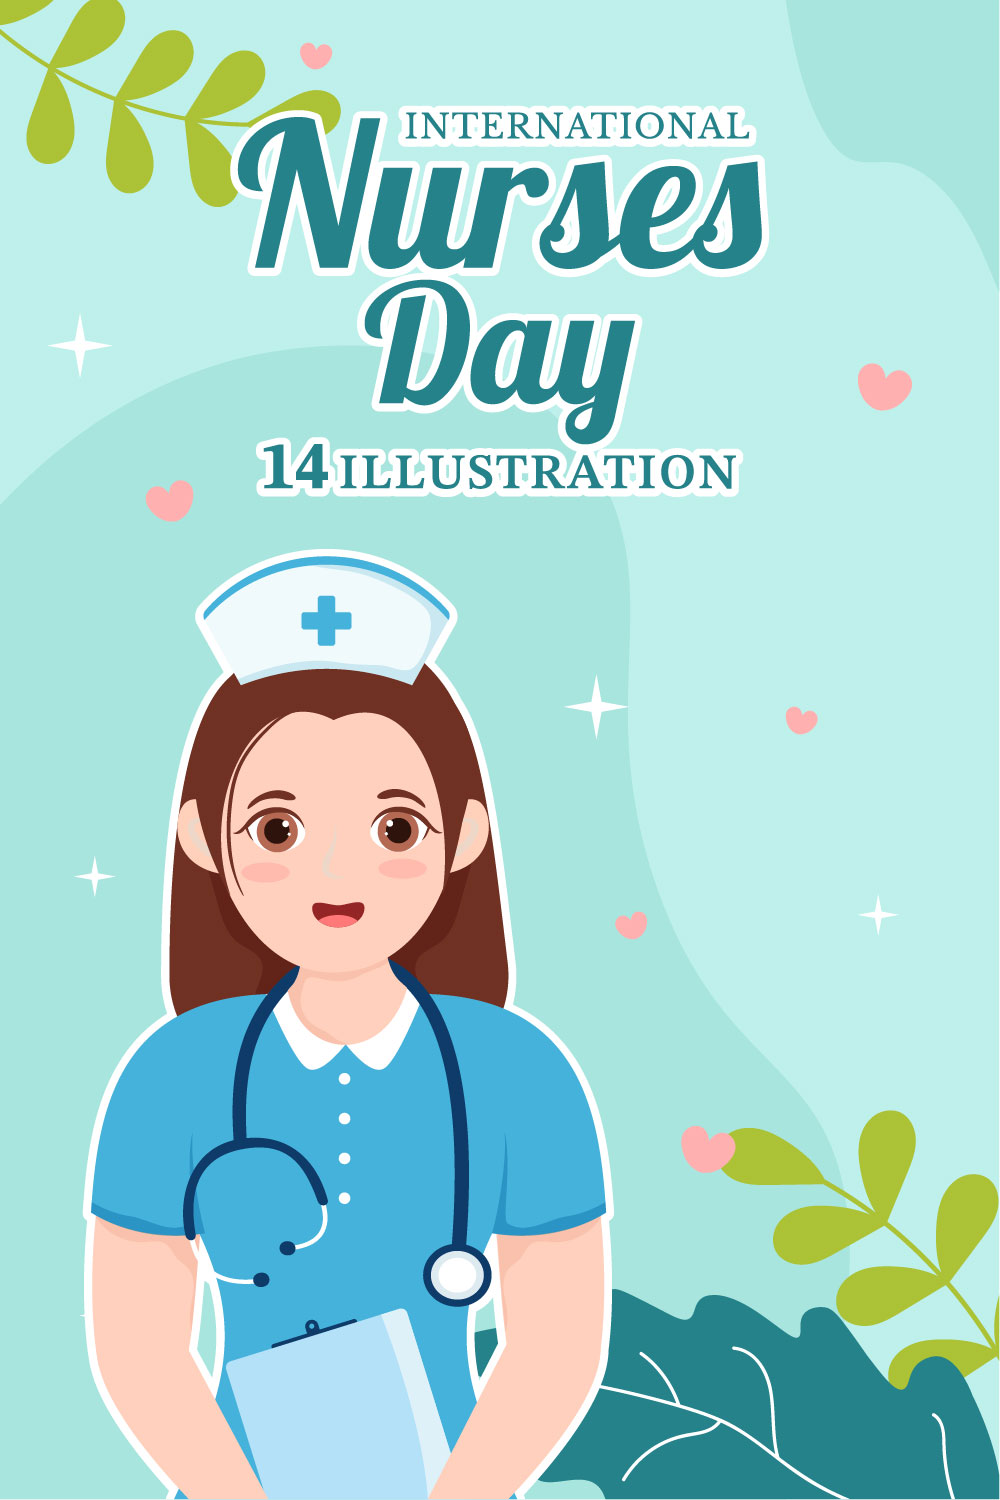 14 International Nurses Day Illustration pinterest preview image.